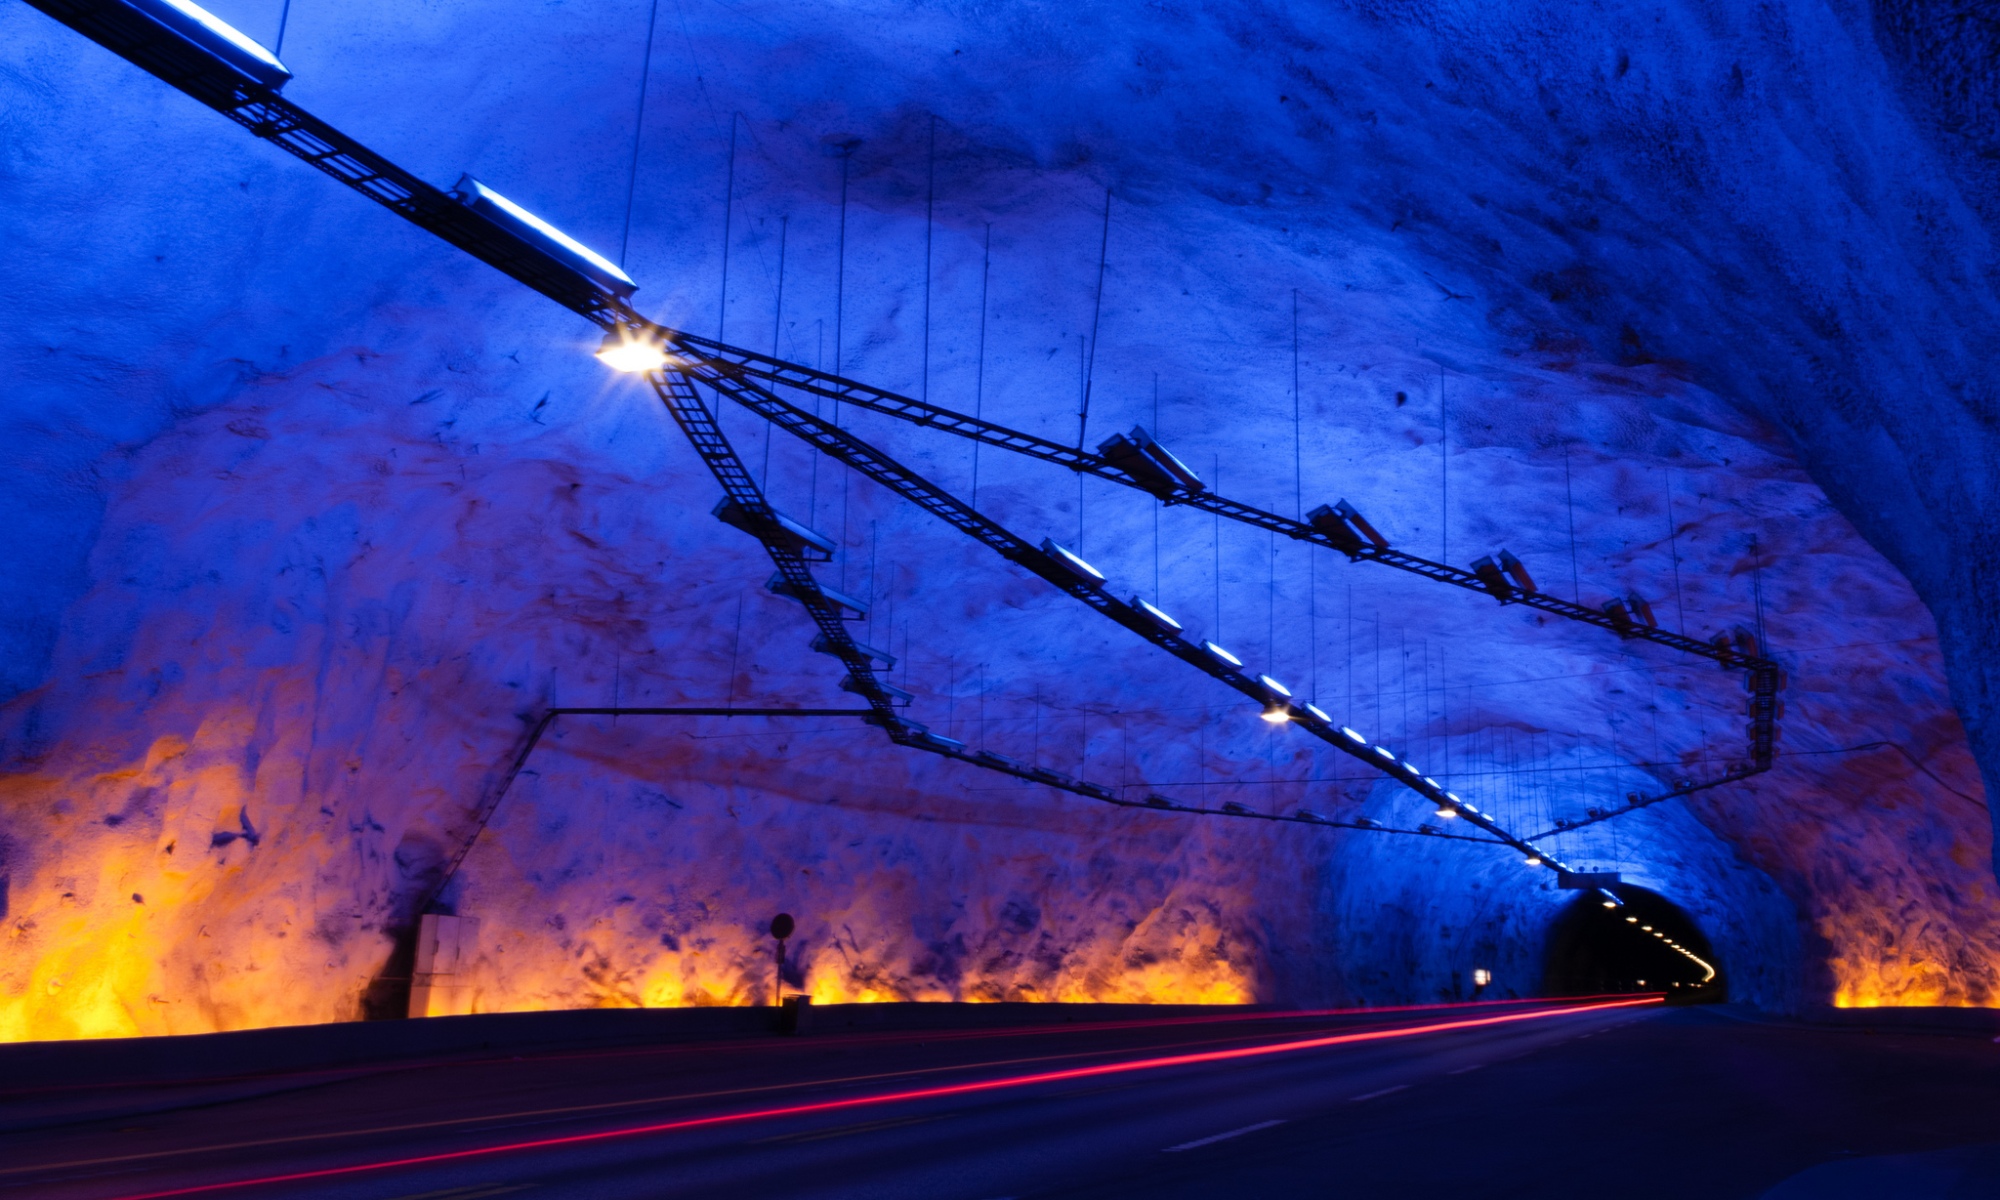 Laerdal Tunnel, Norway